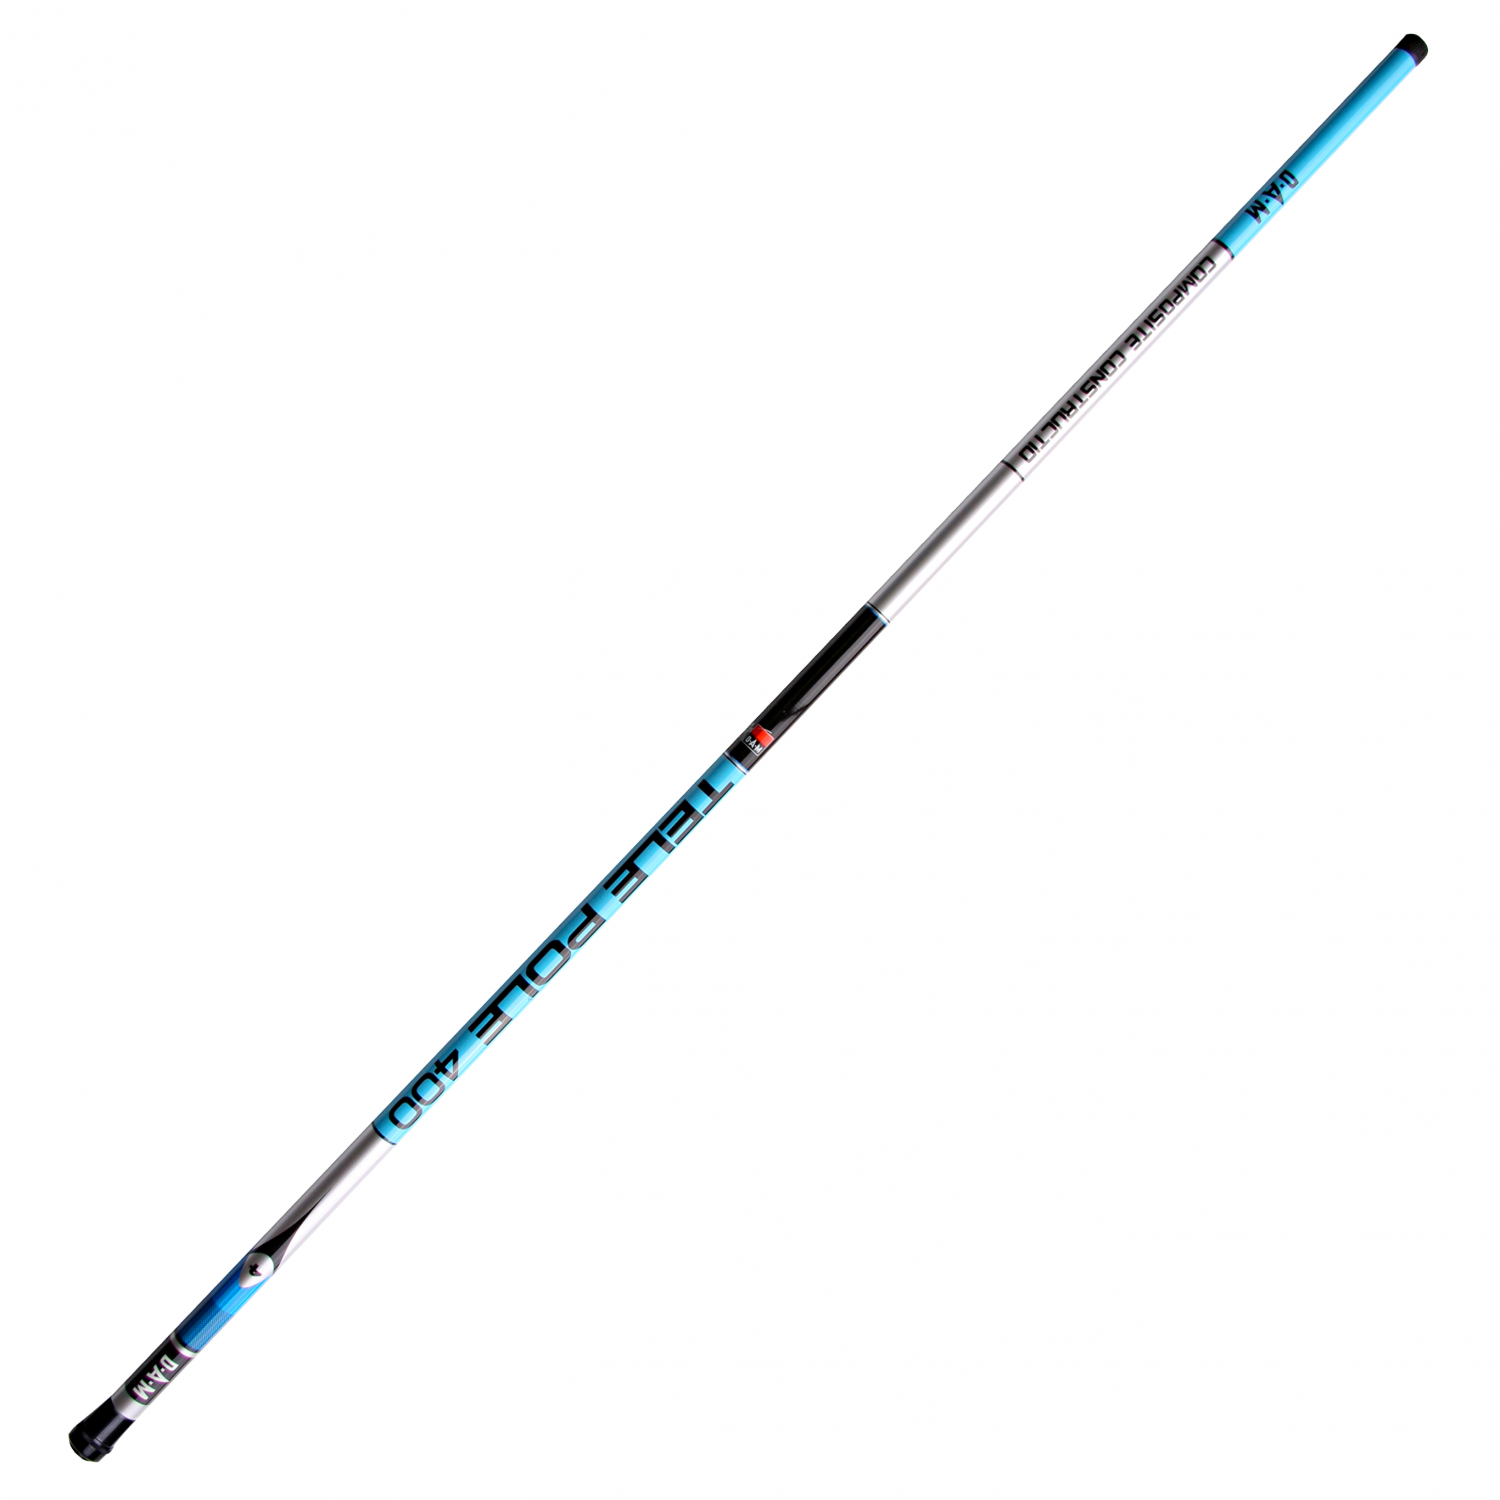 DAM DAM Tele-Pole Composite Construction - Fishing Rods 